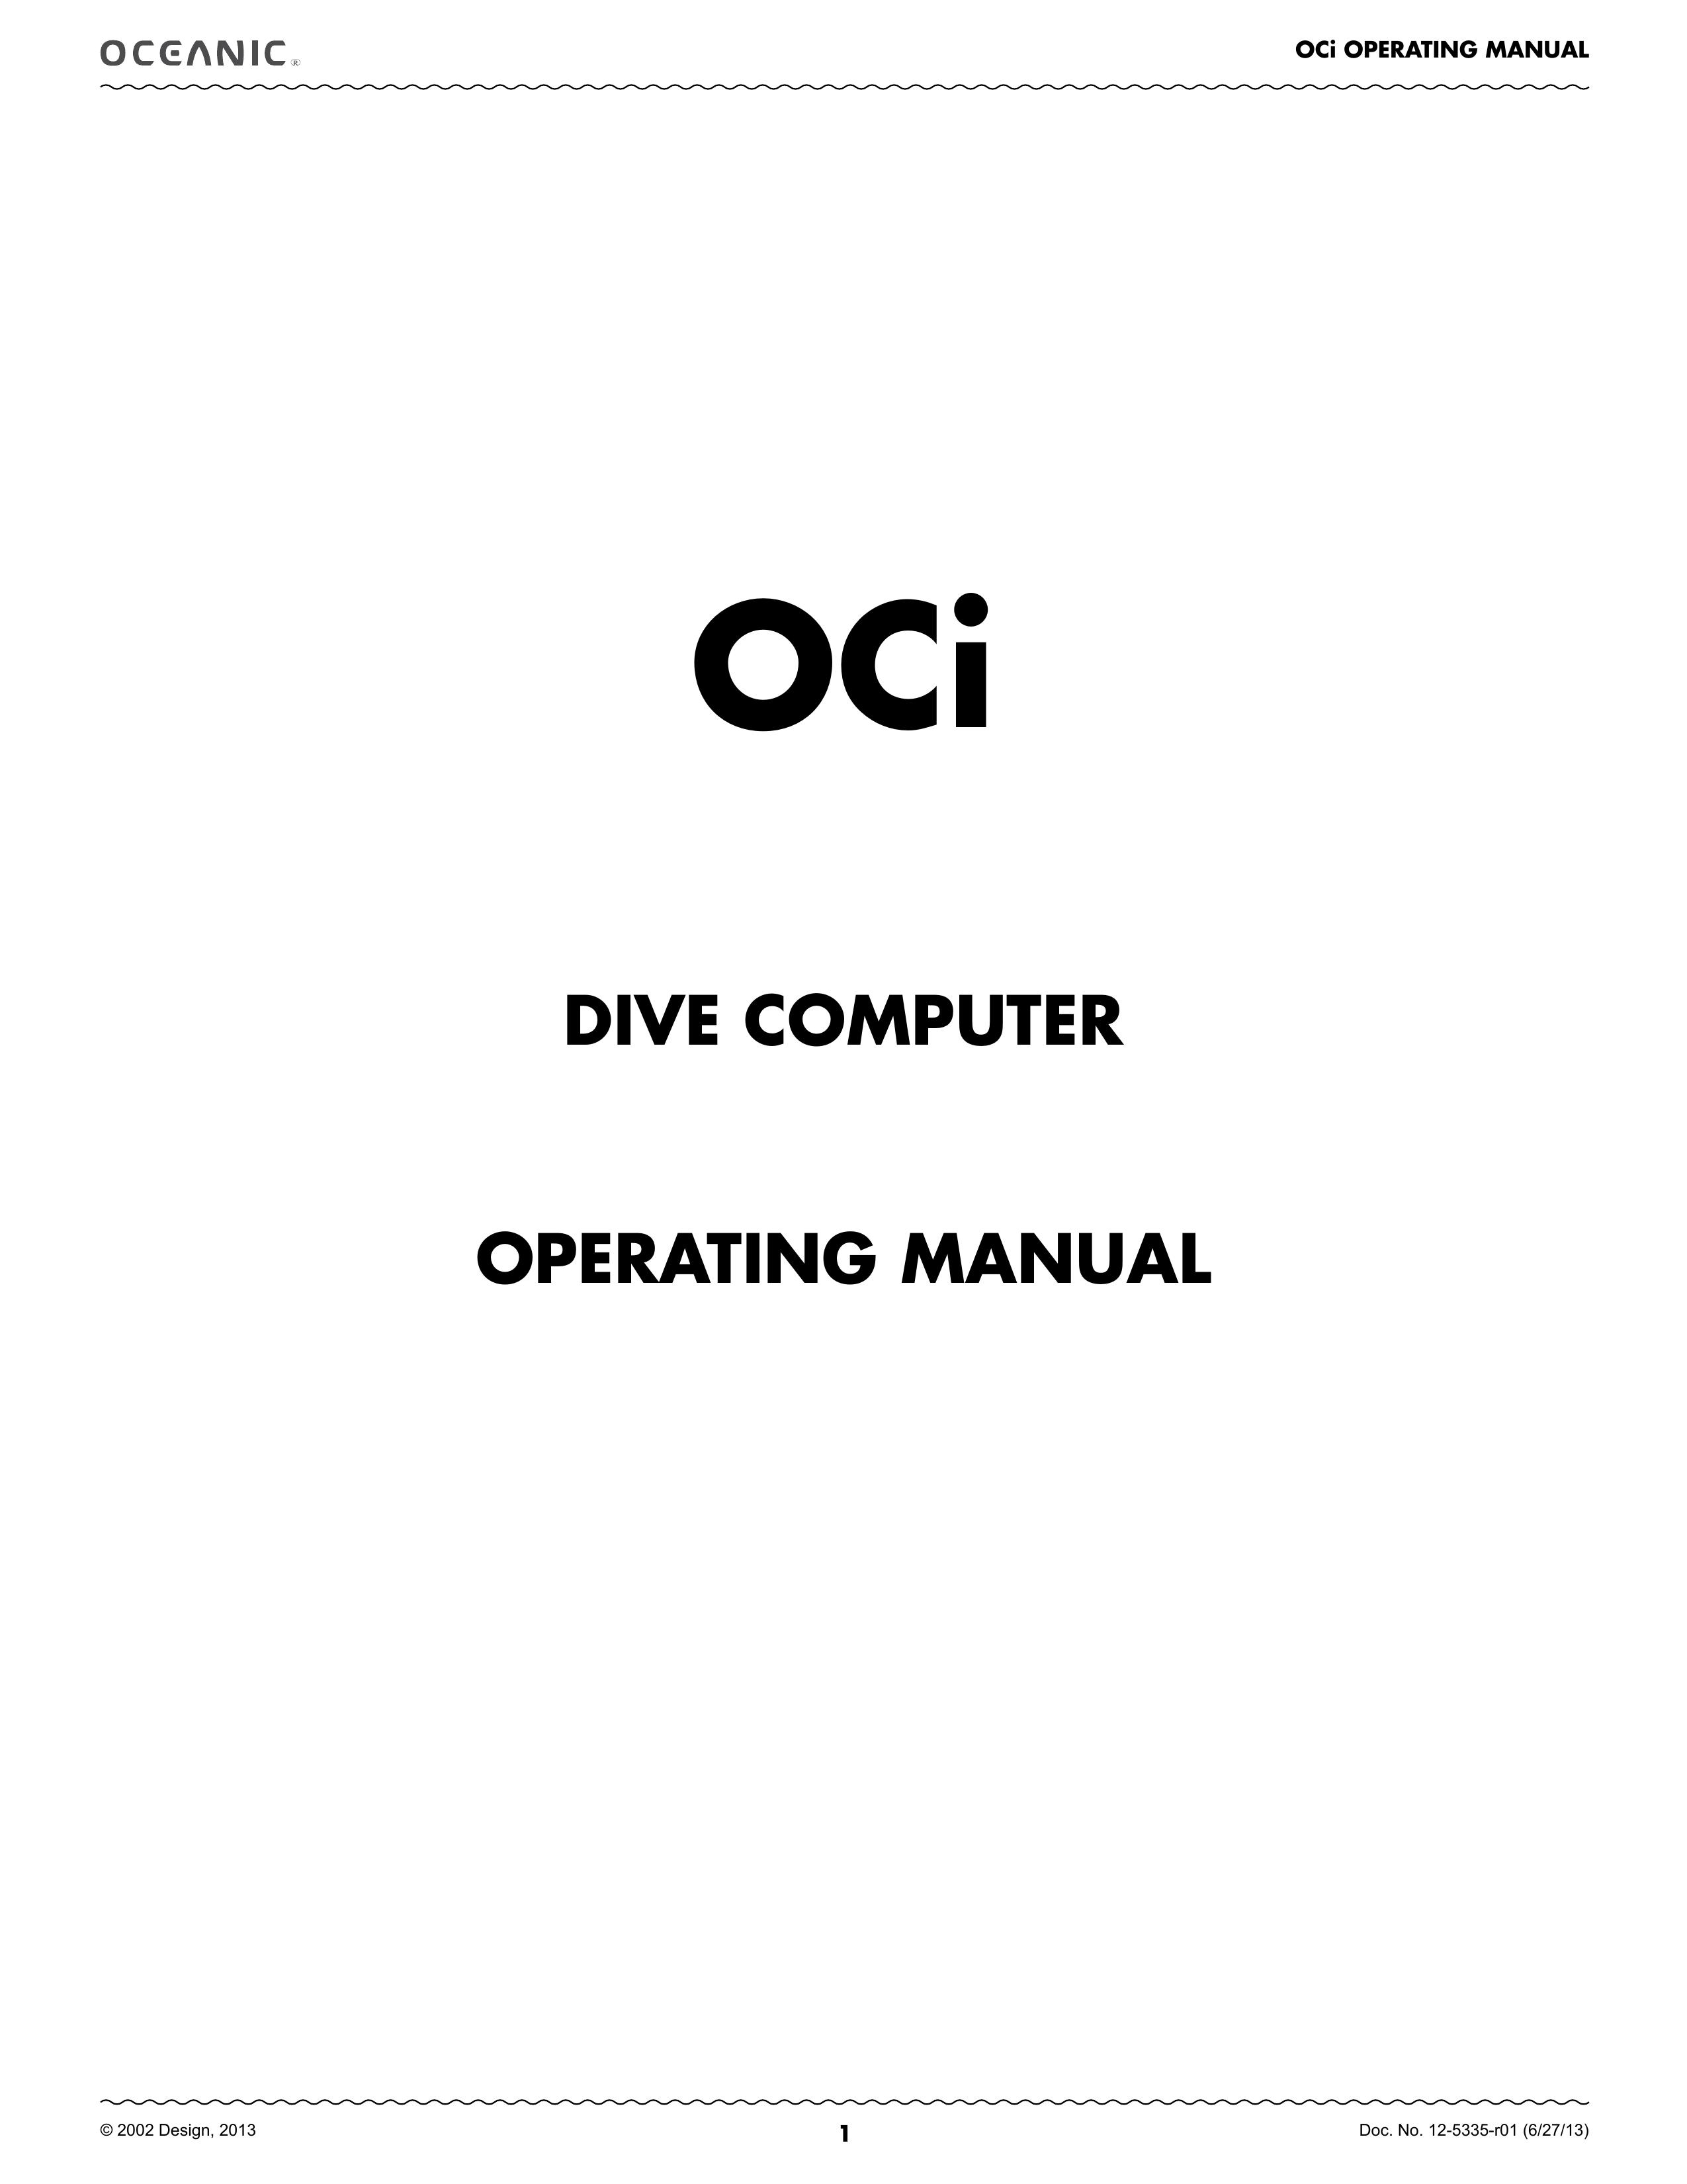 Oceanic 04-8792-29 Scuba Diving Equipment User Manual